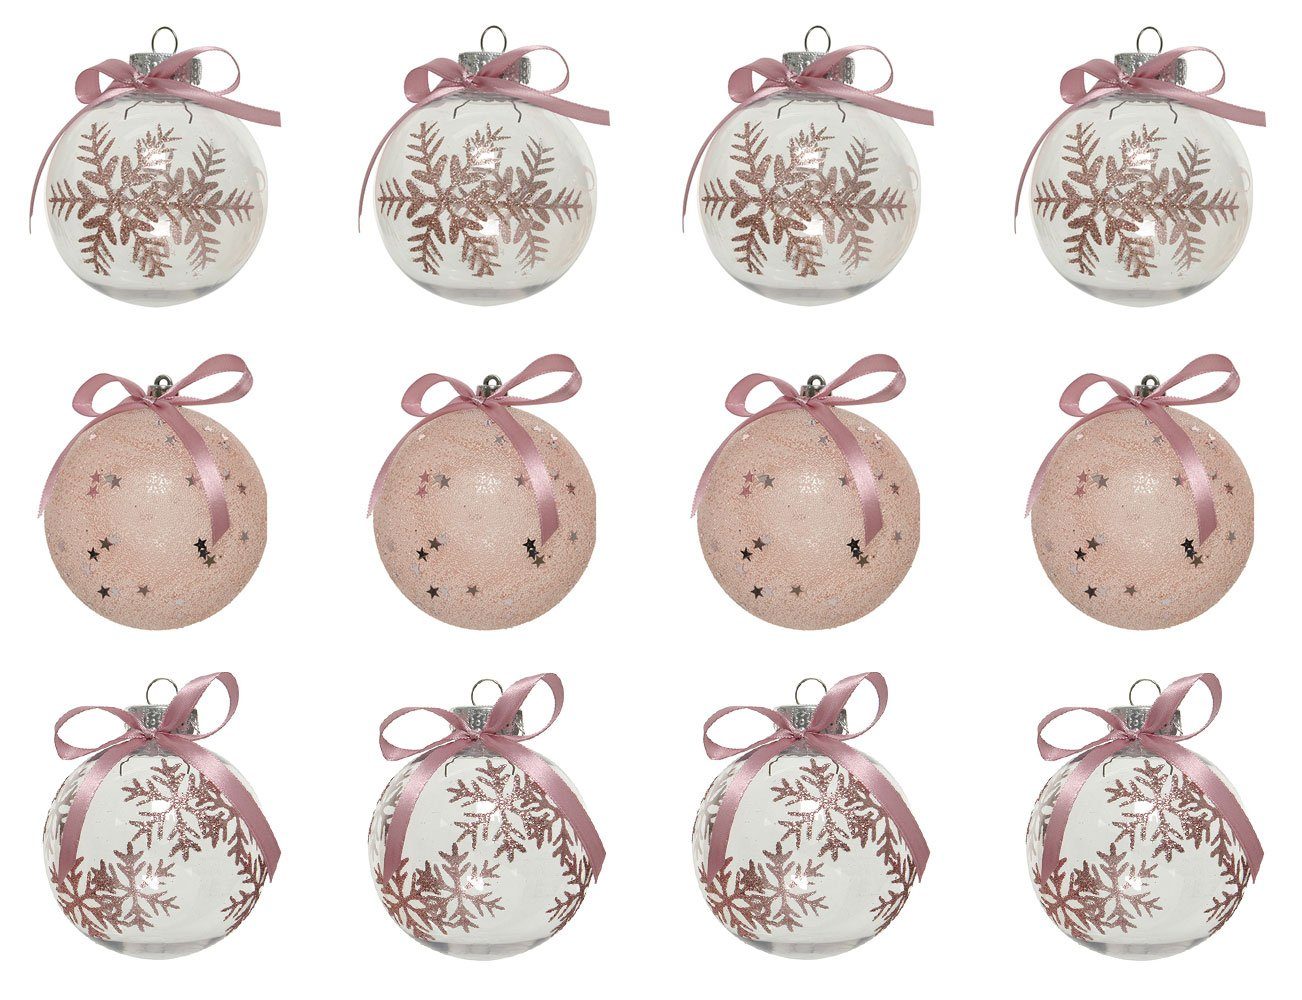 Decoris season decorations Christbaumschmuck, Weihnachtskugeln Kunststoff mit Motiv 8cm rosa transparent, 12er Set